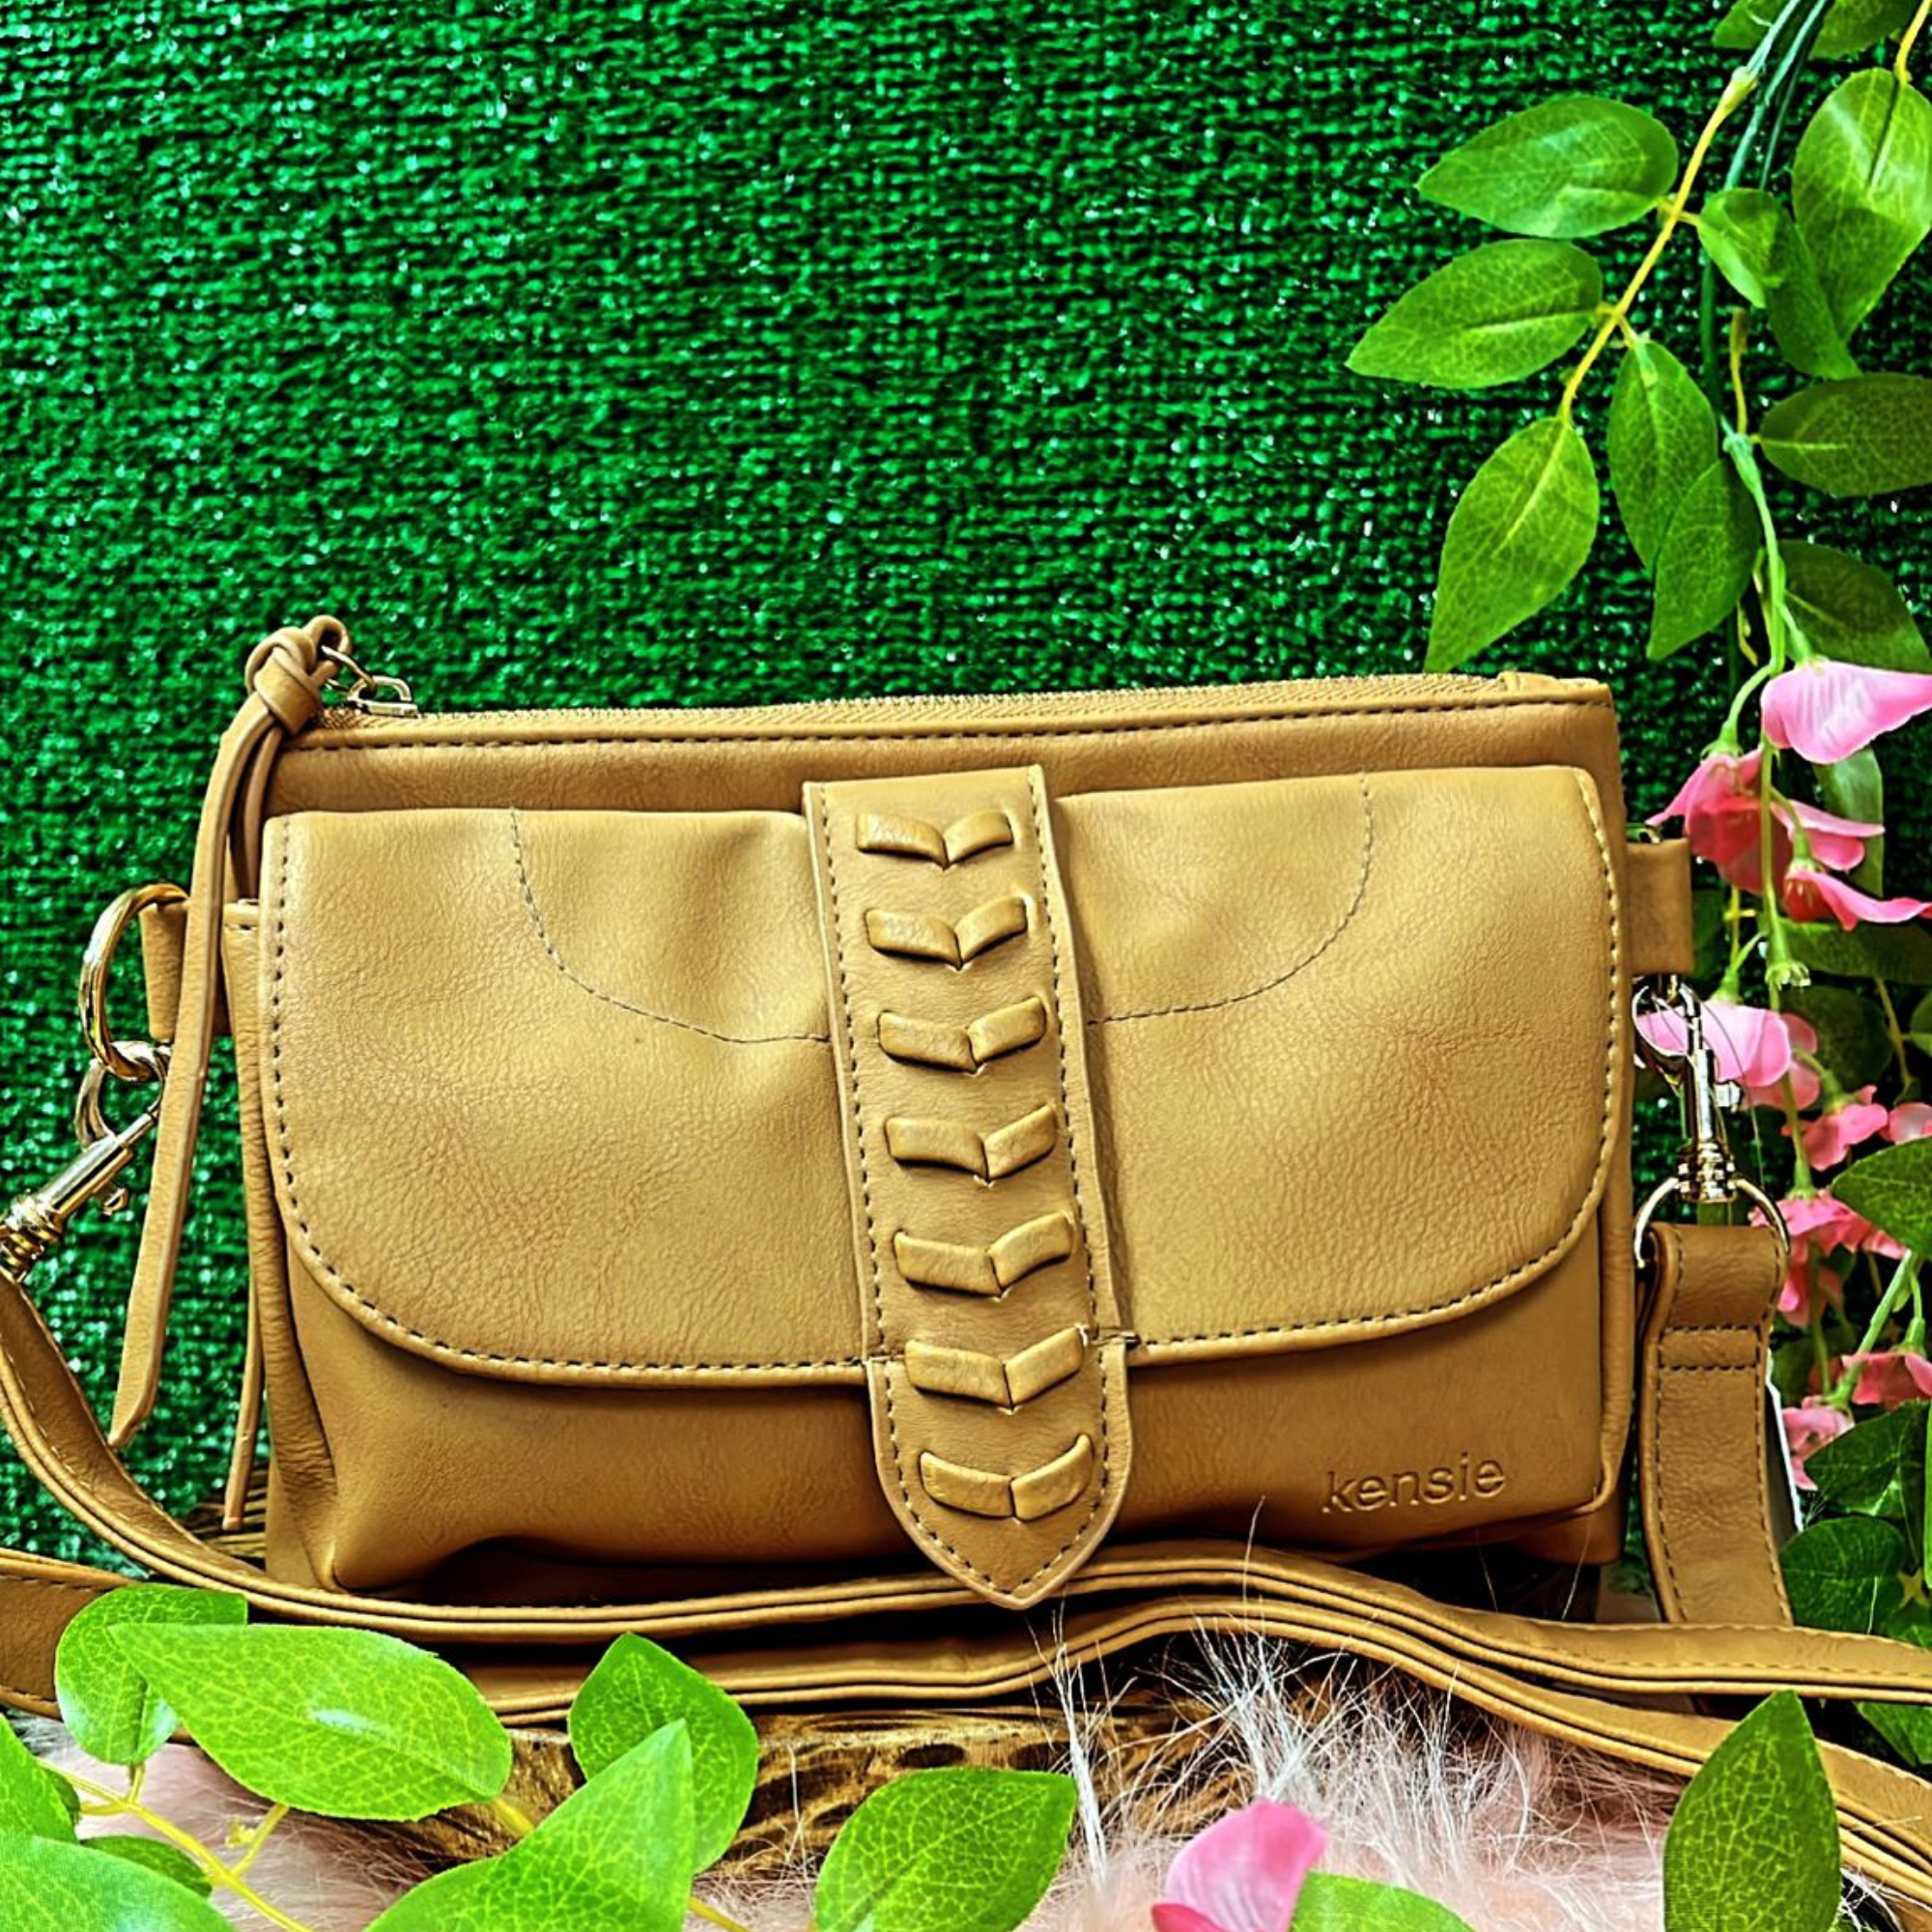 SEMIMAY Women Tote Bag Fashion Handbags For Ladies Purse Satchel Shoulder Bags  Tote Leather Bag - Walmart.com